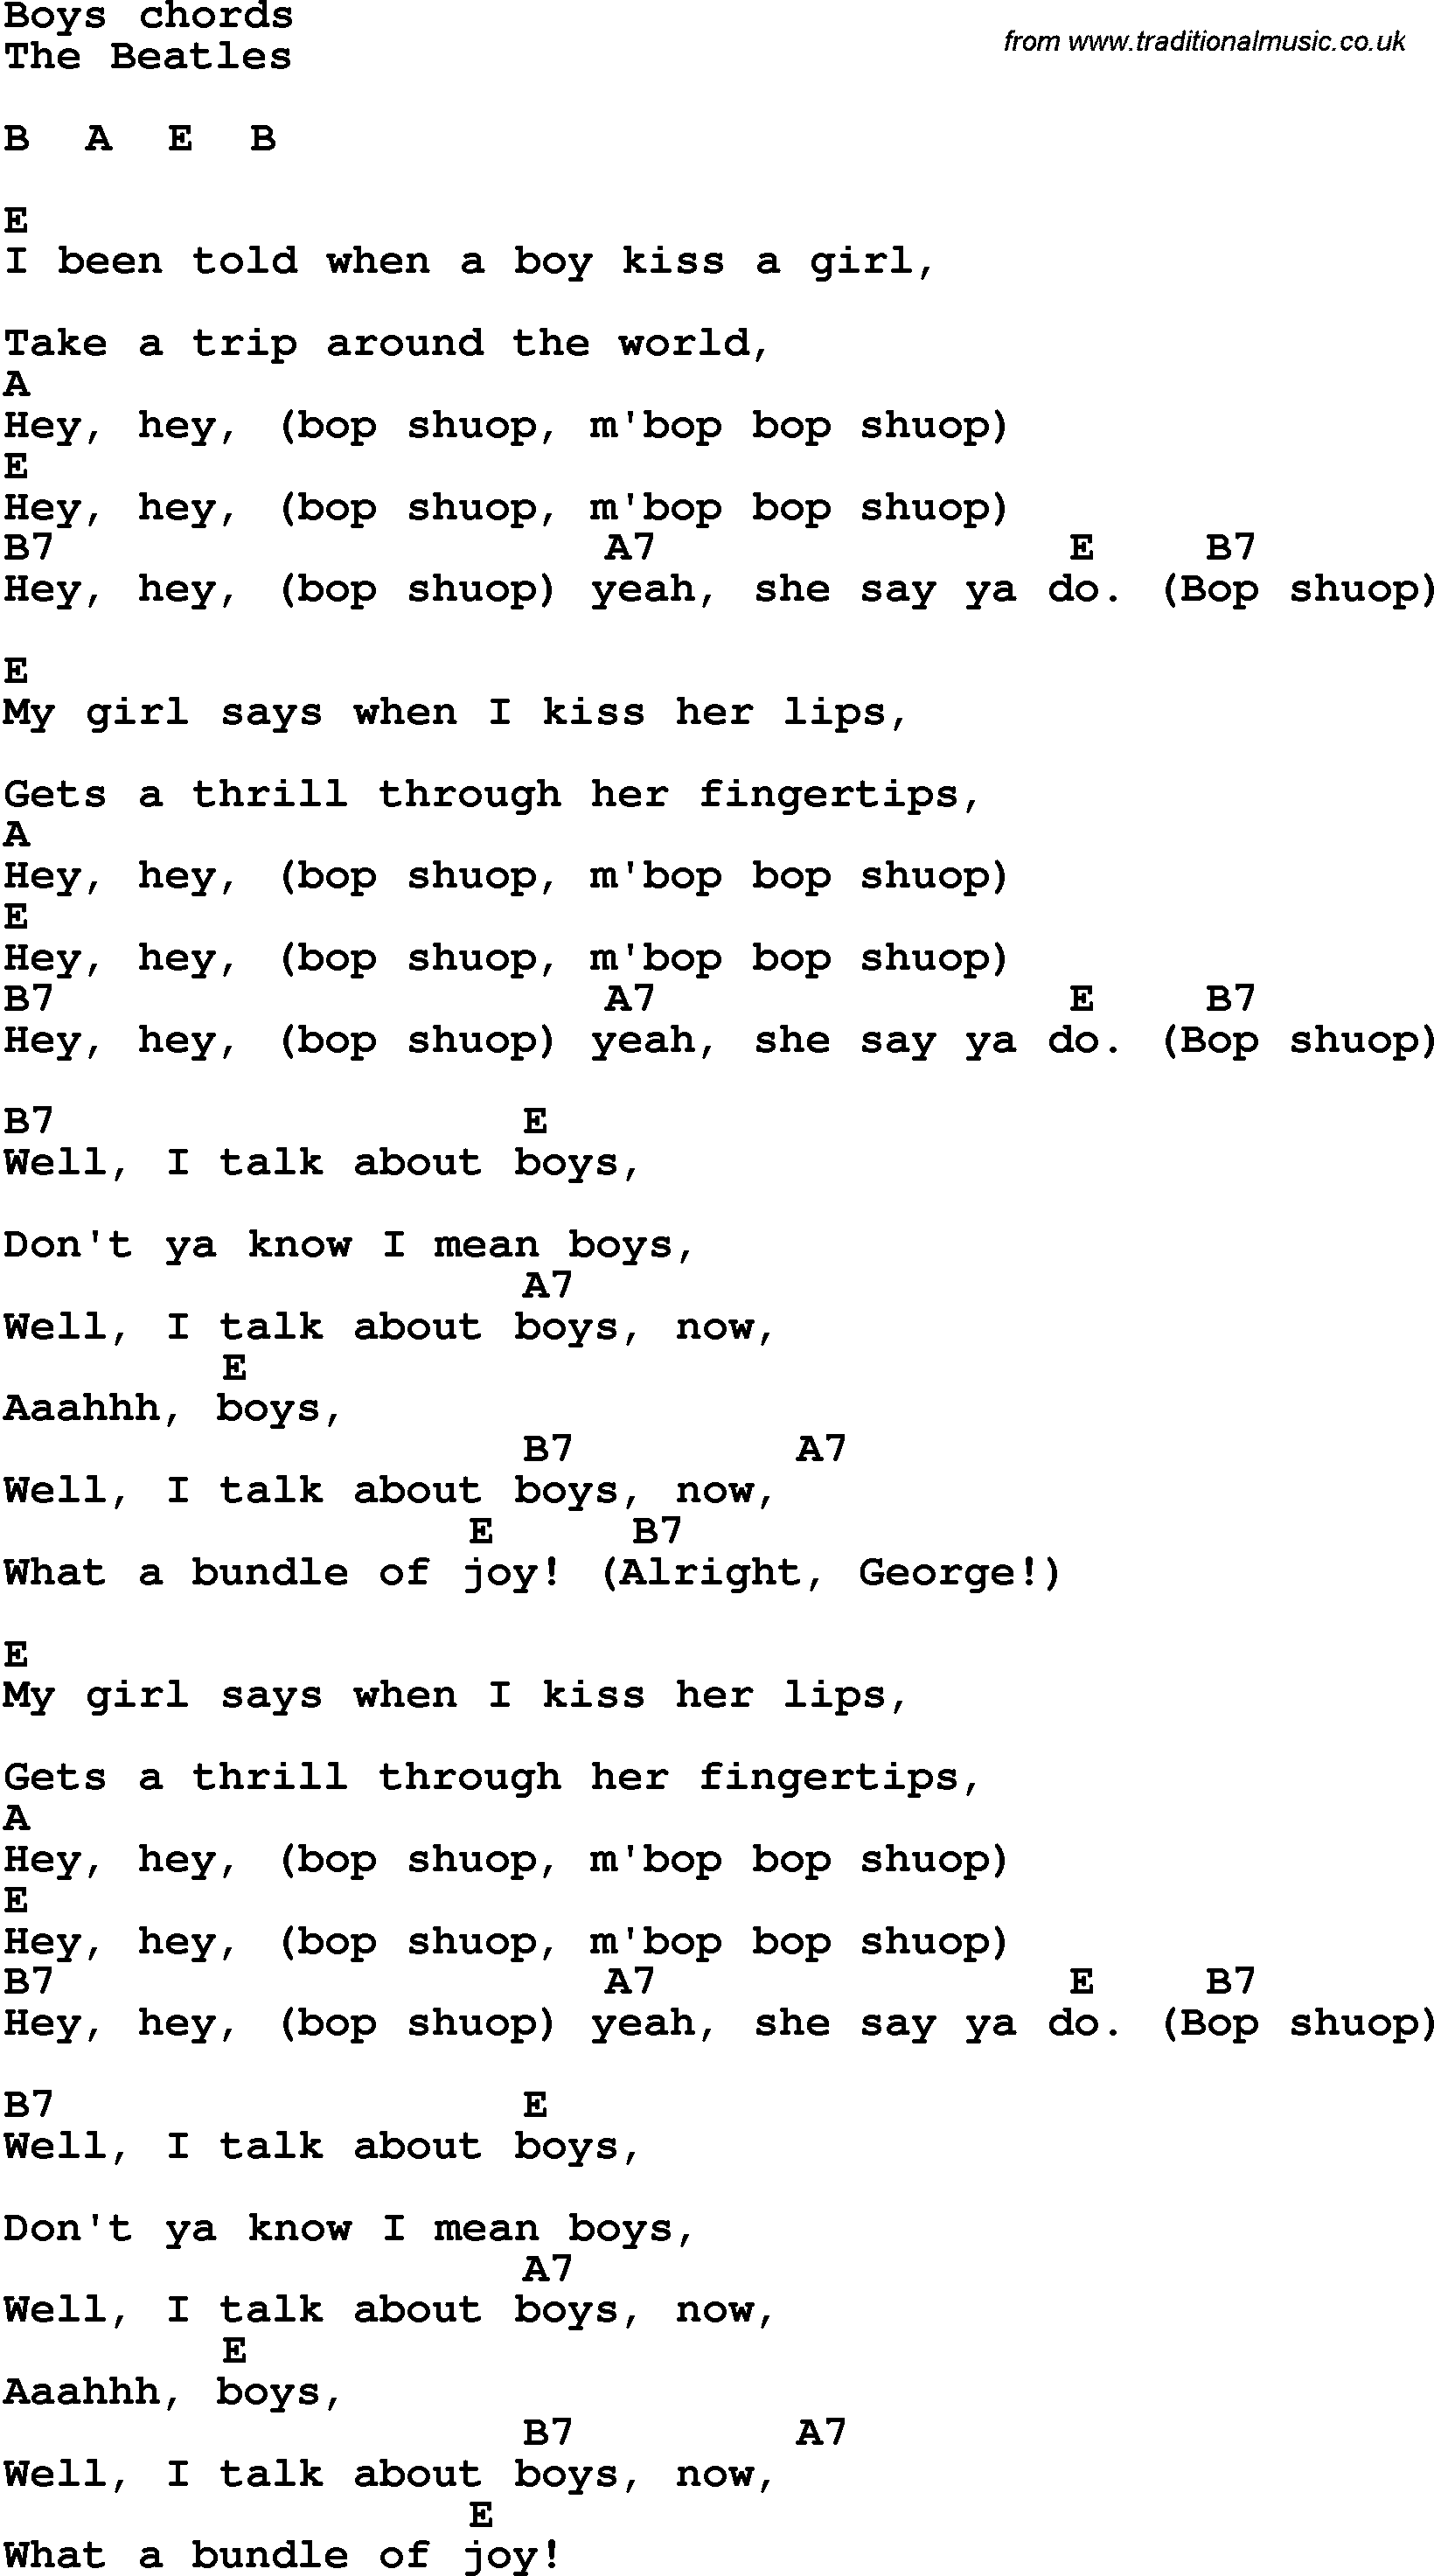 Song Lyrics with guitar chords for Boys